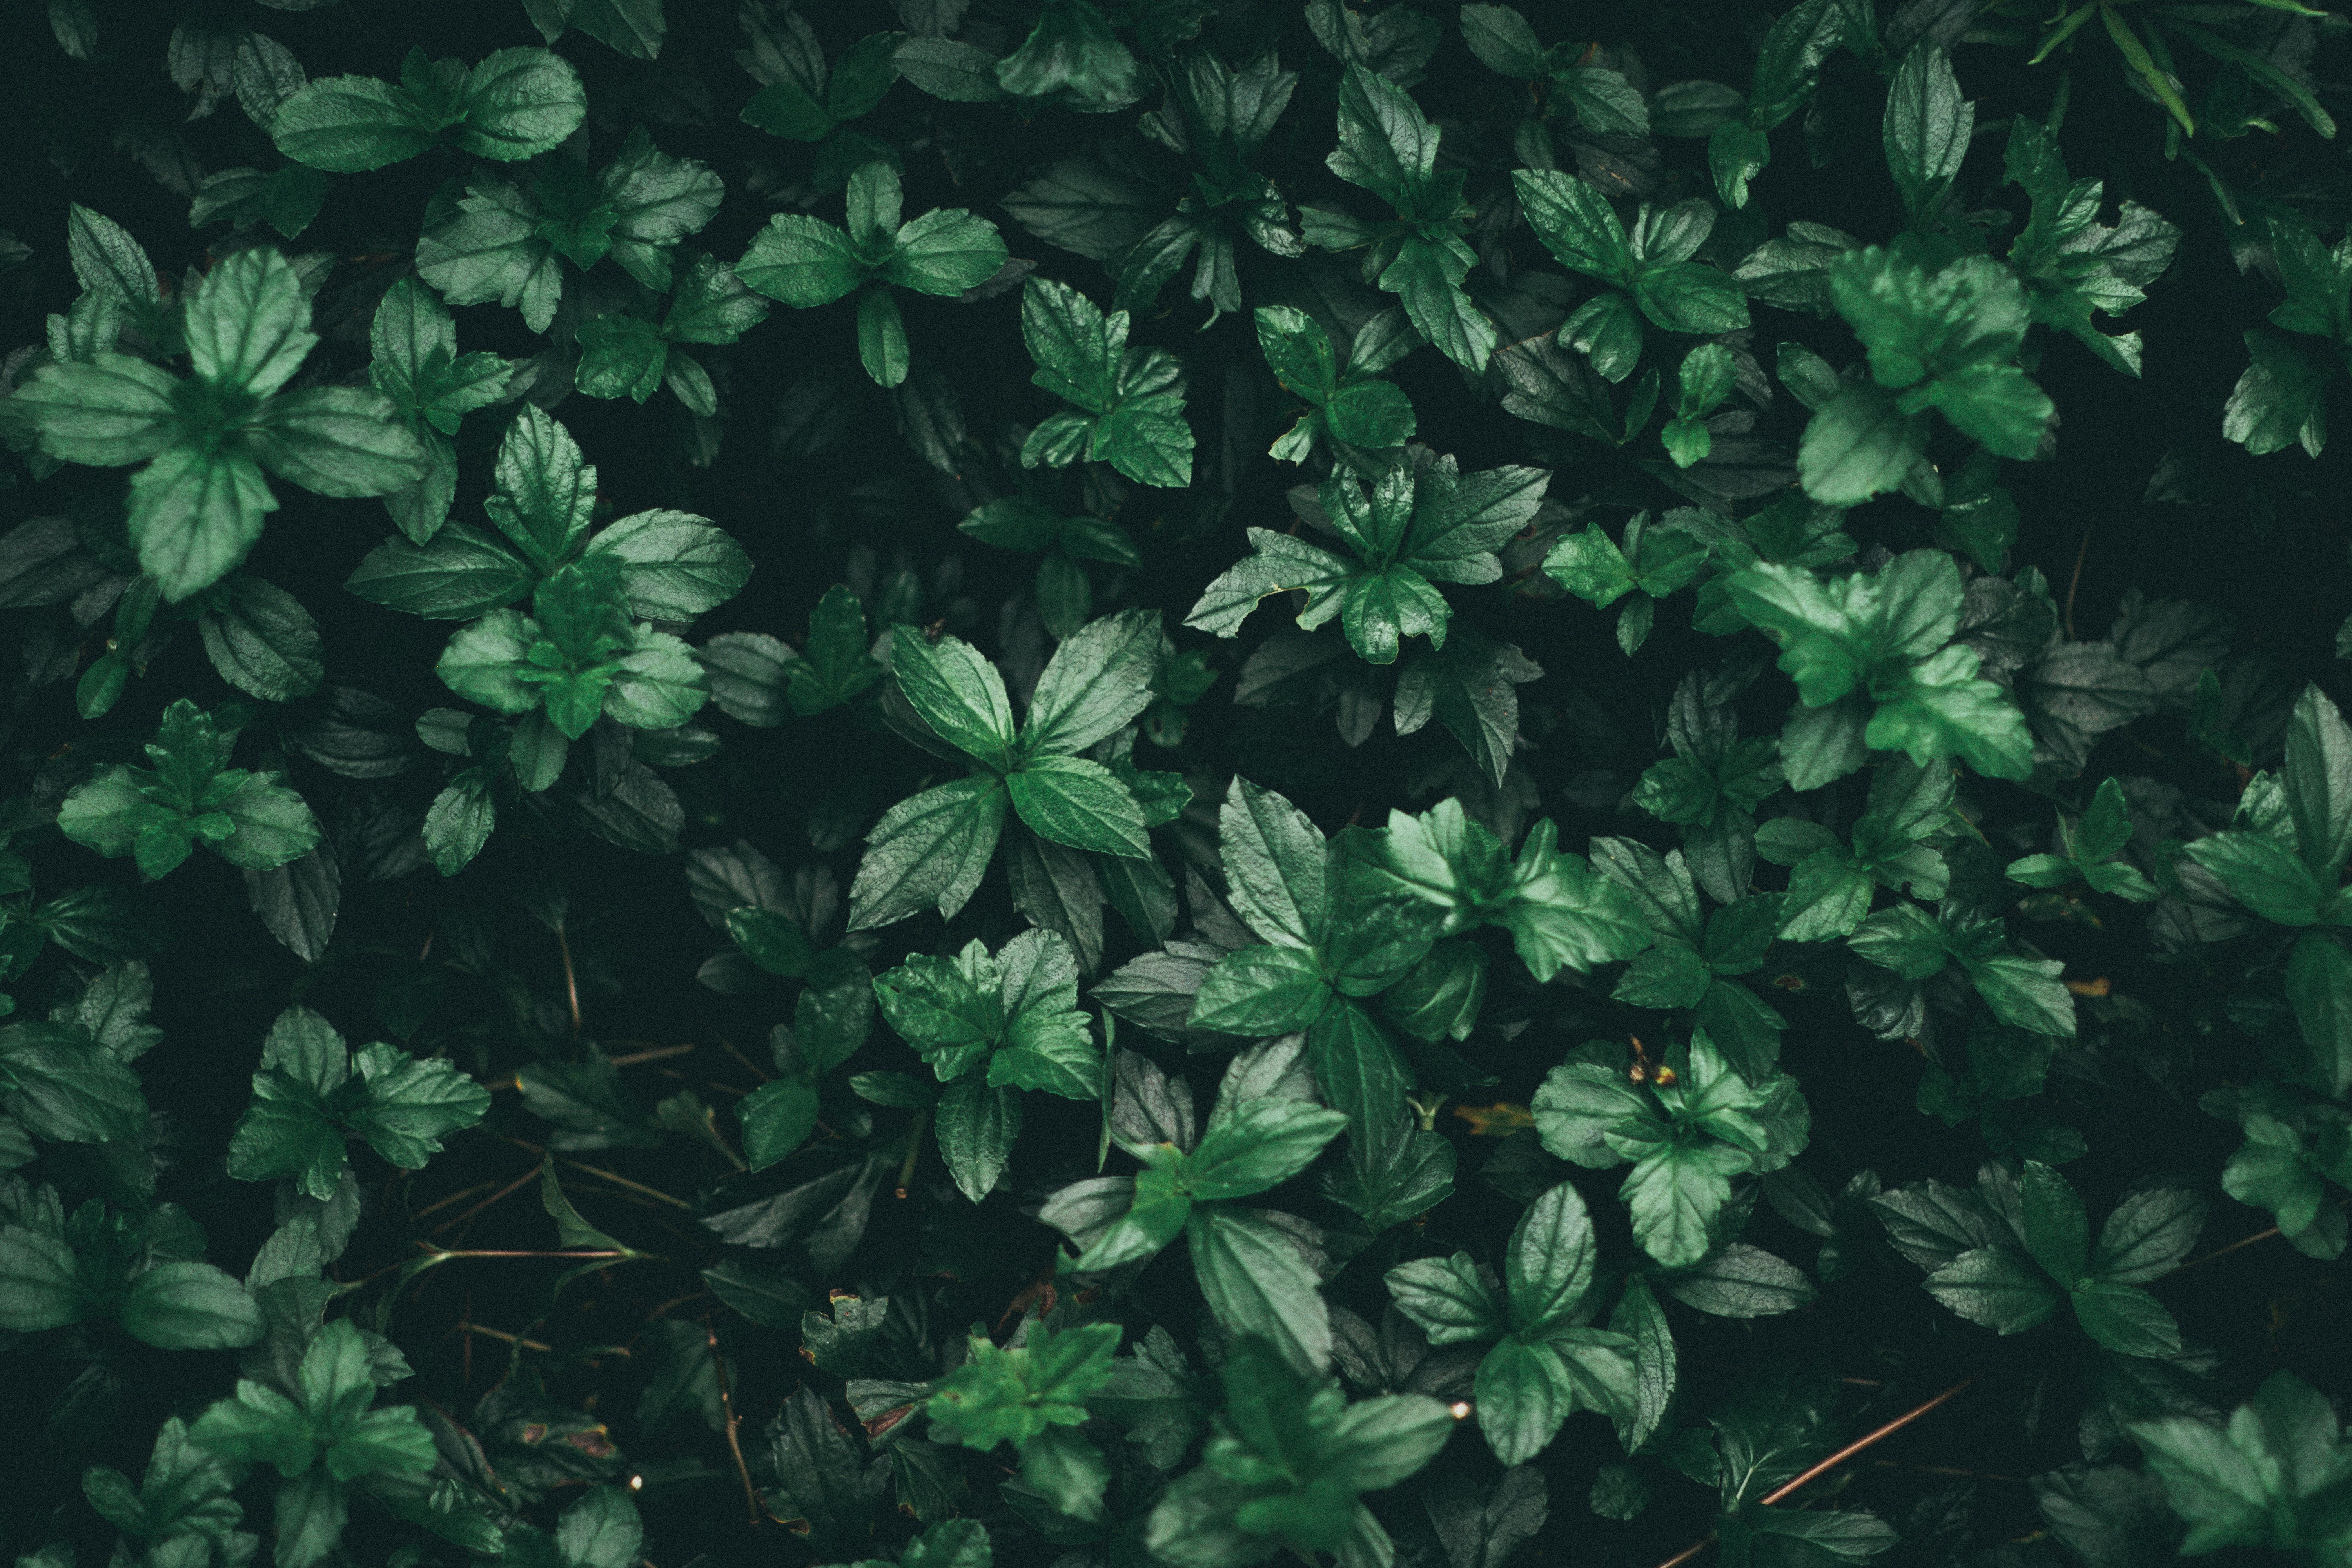 A field of green leaves. - Light green, green, mint green, soft green, dark green, plants